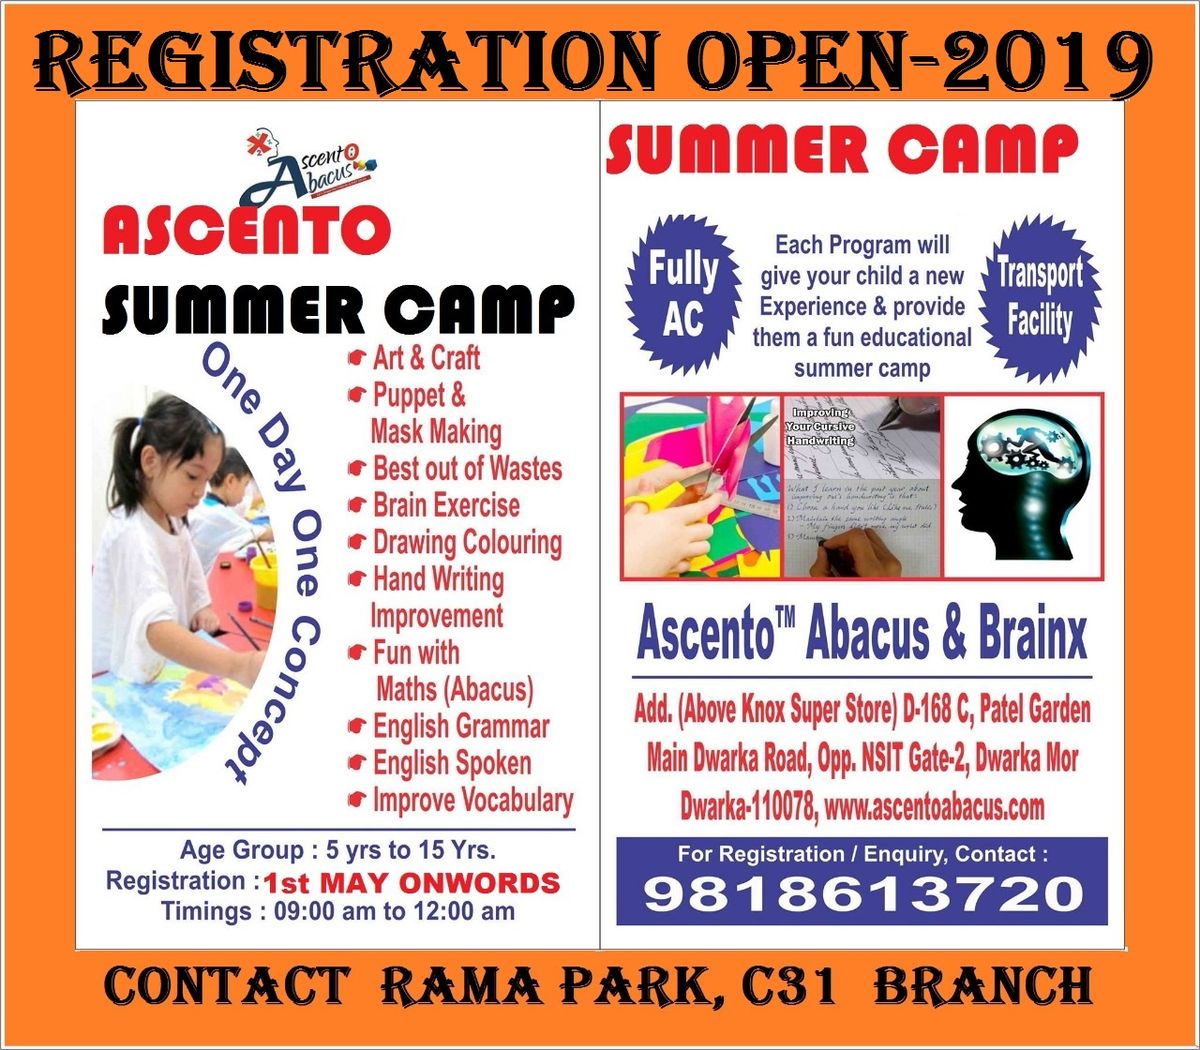 Ascento summer camp Dwarka